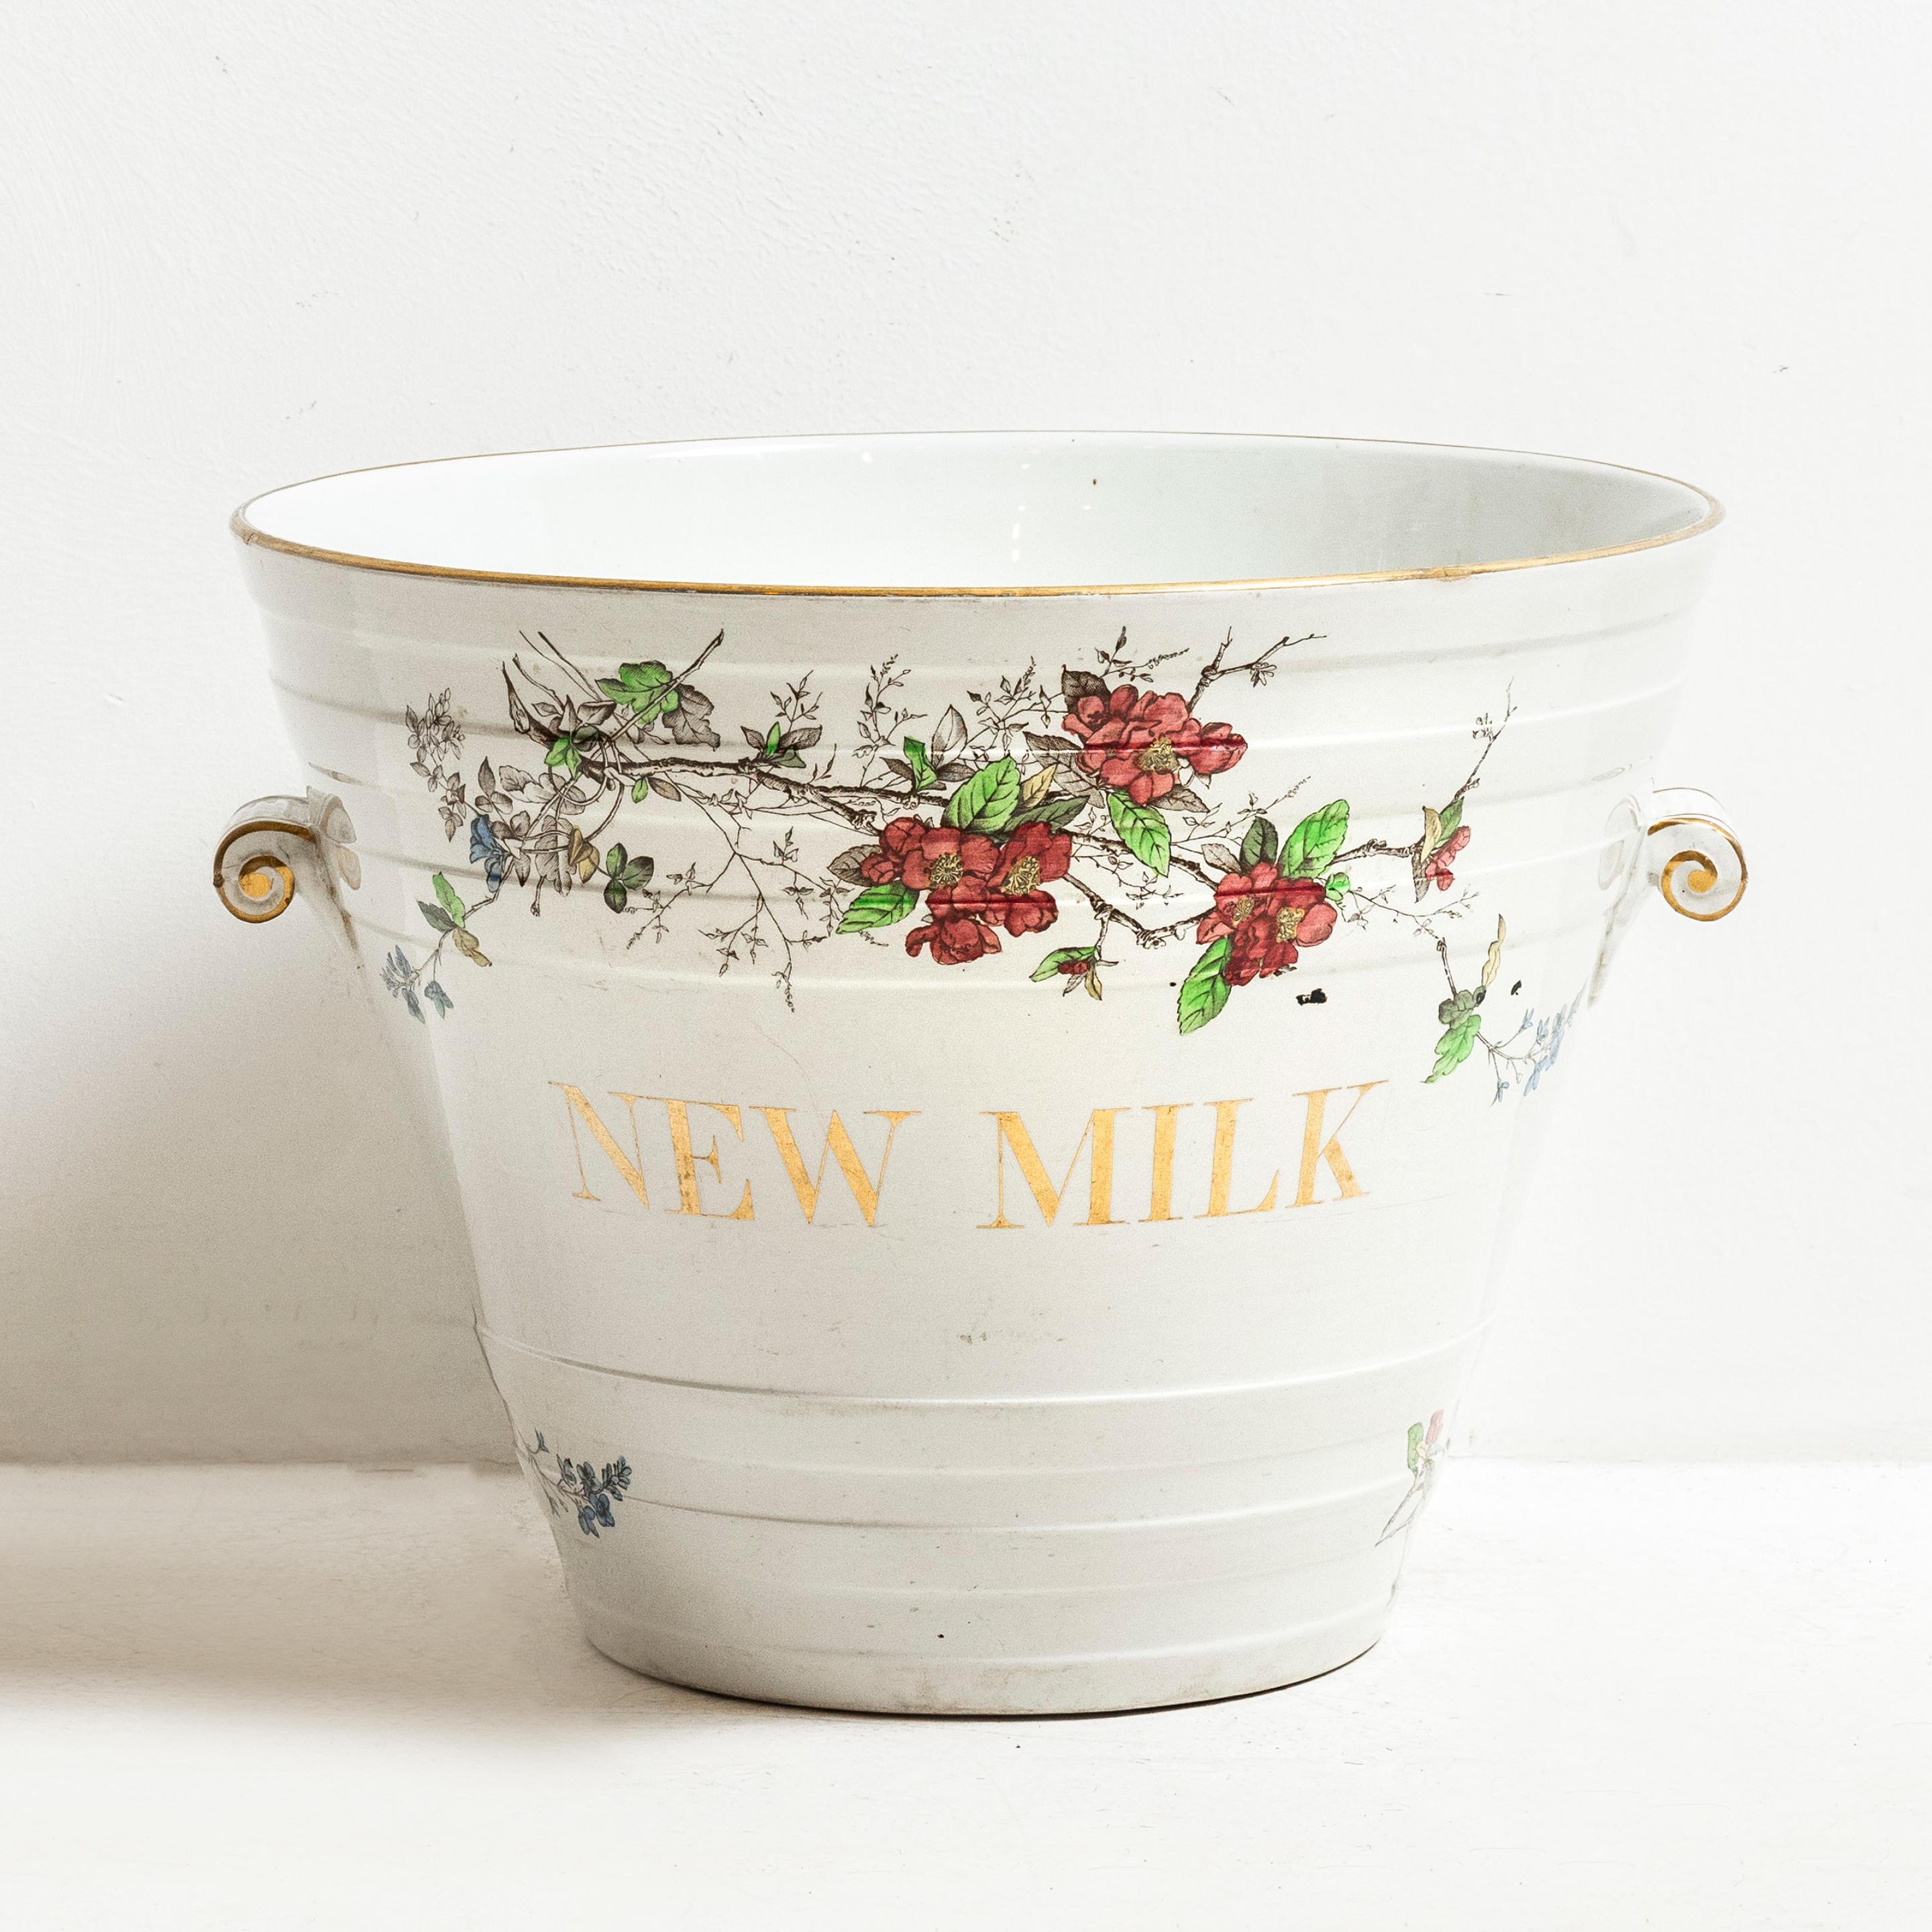 Ref: 126618
Pure Milk Pail. With gilt lettering and floral design.
England circa 1890

Measurements: H: 31cm (12.2